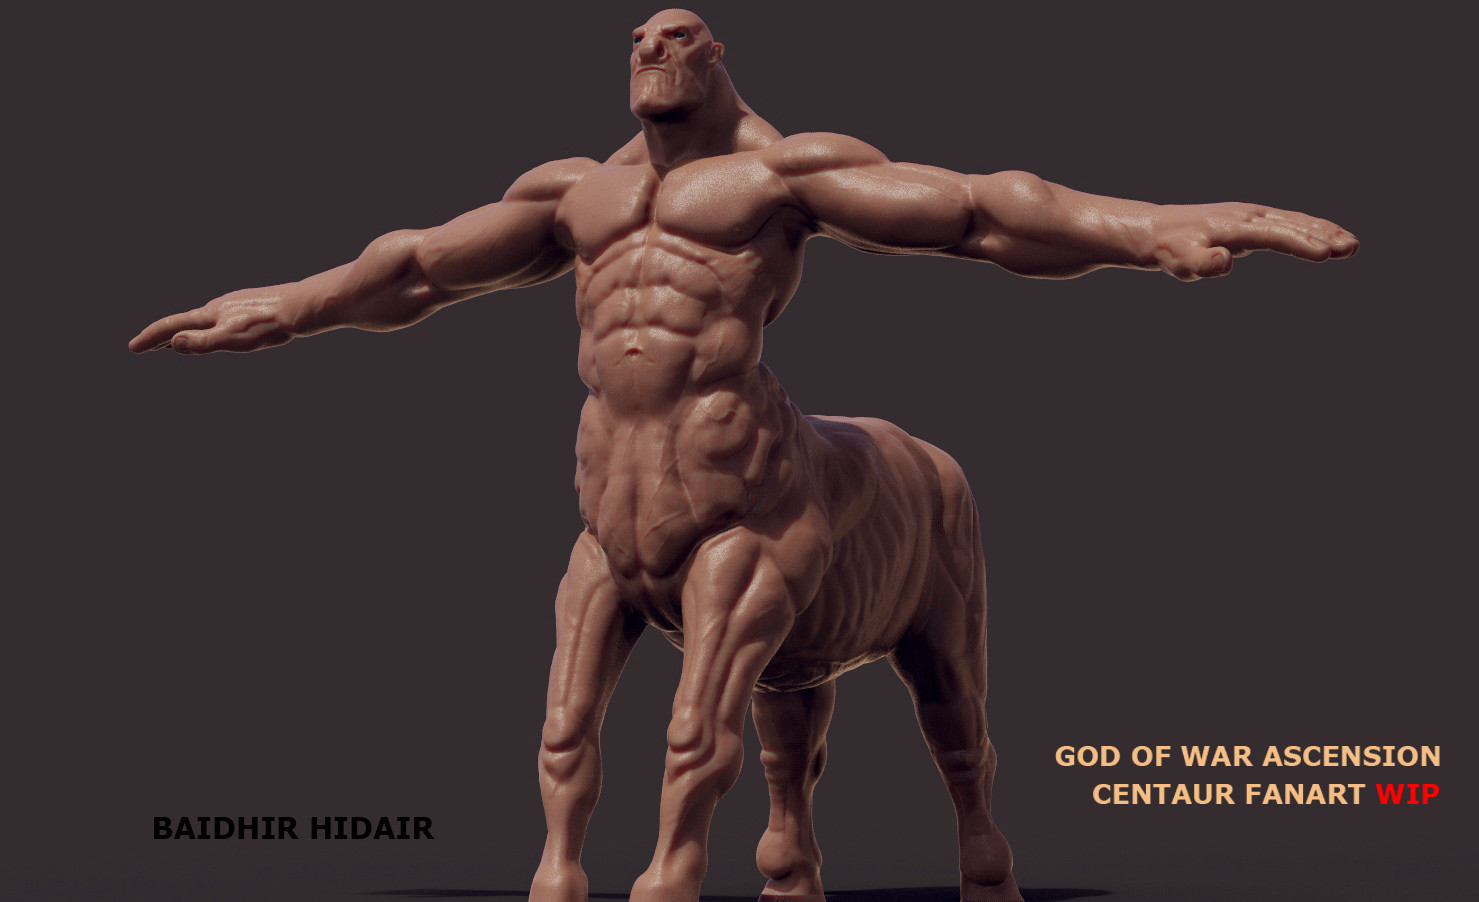 baidhir-hidair-centaur-sht1-comp1.jpg